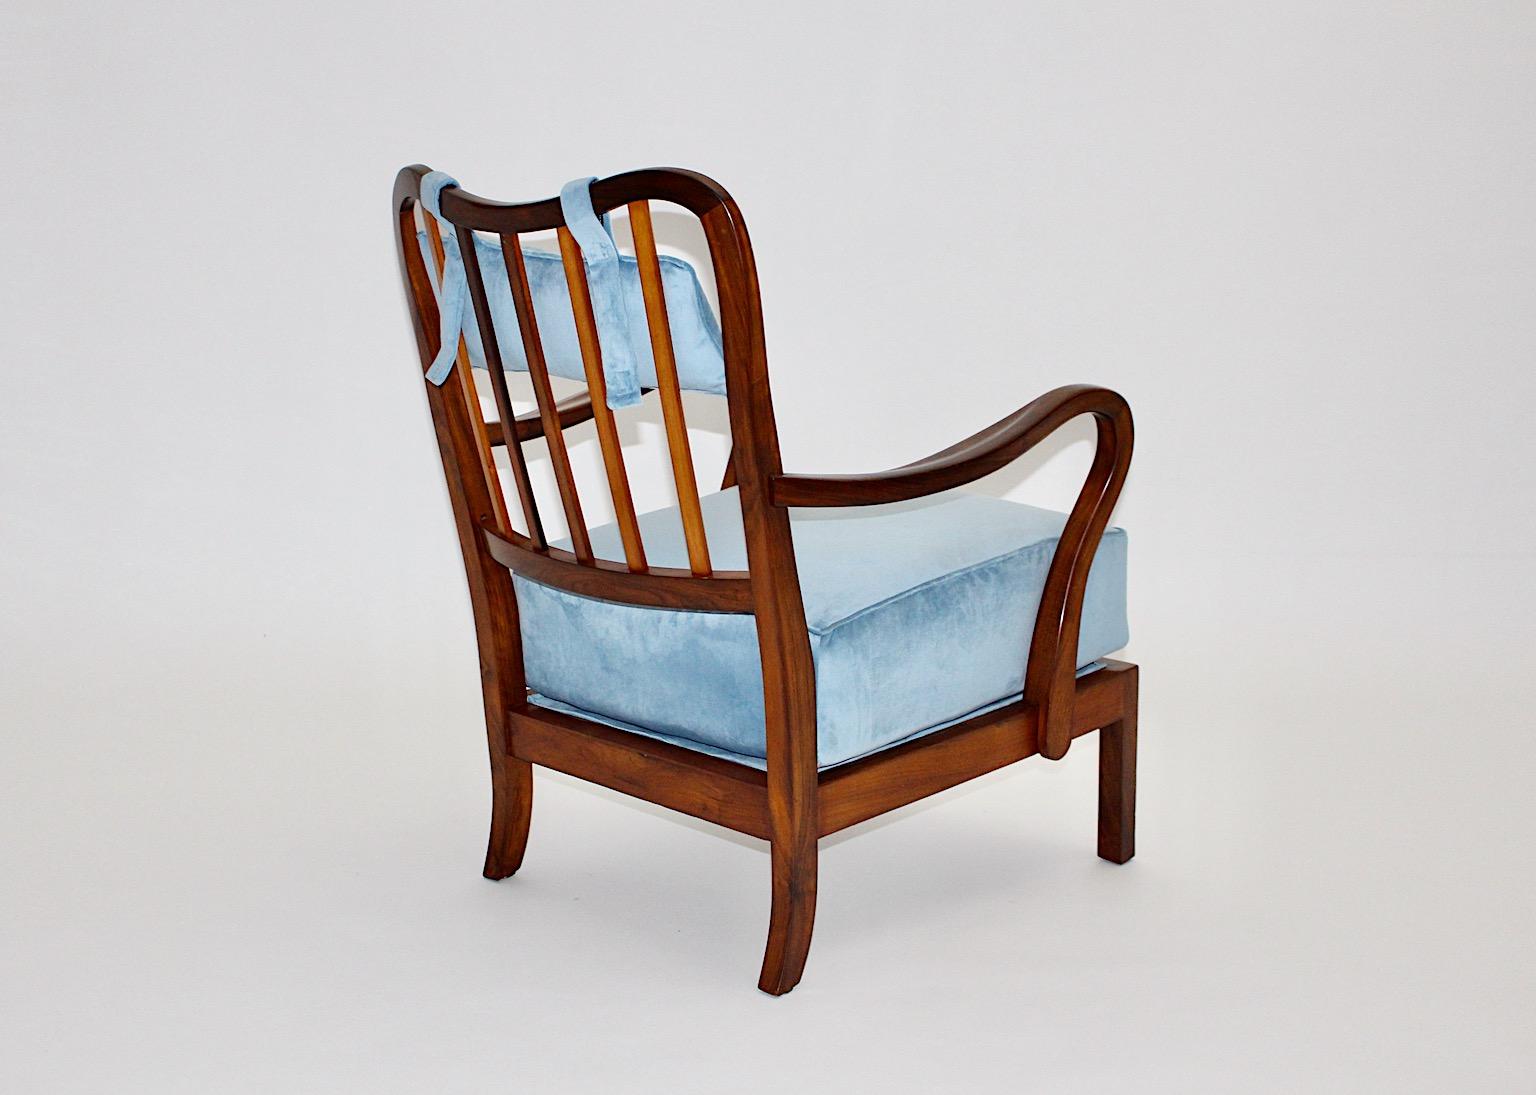 Austrian Art Deco Walnut Vintage Lounge Chair Armchair Attr. Oswald Haerdtl 1930s Vienna For Sale